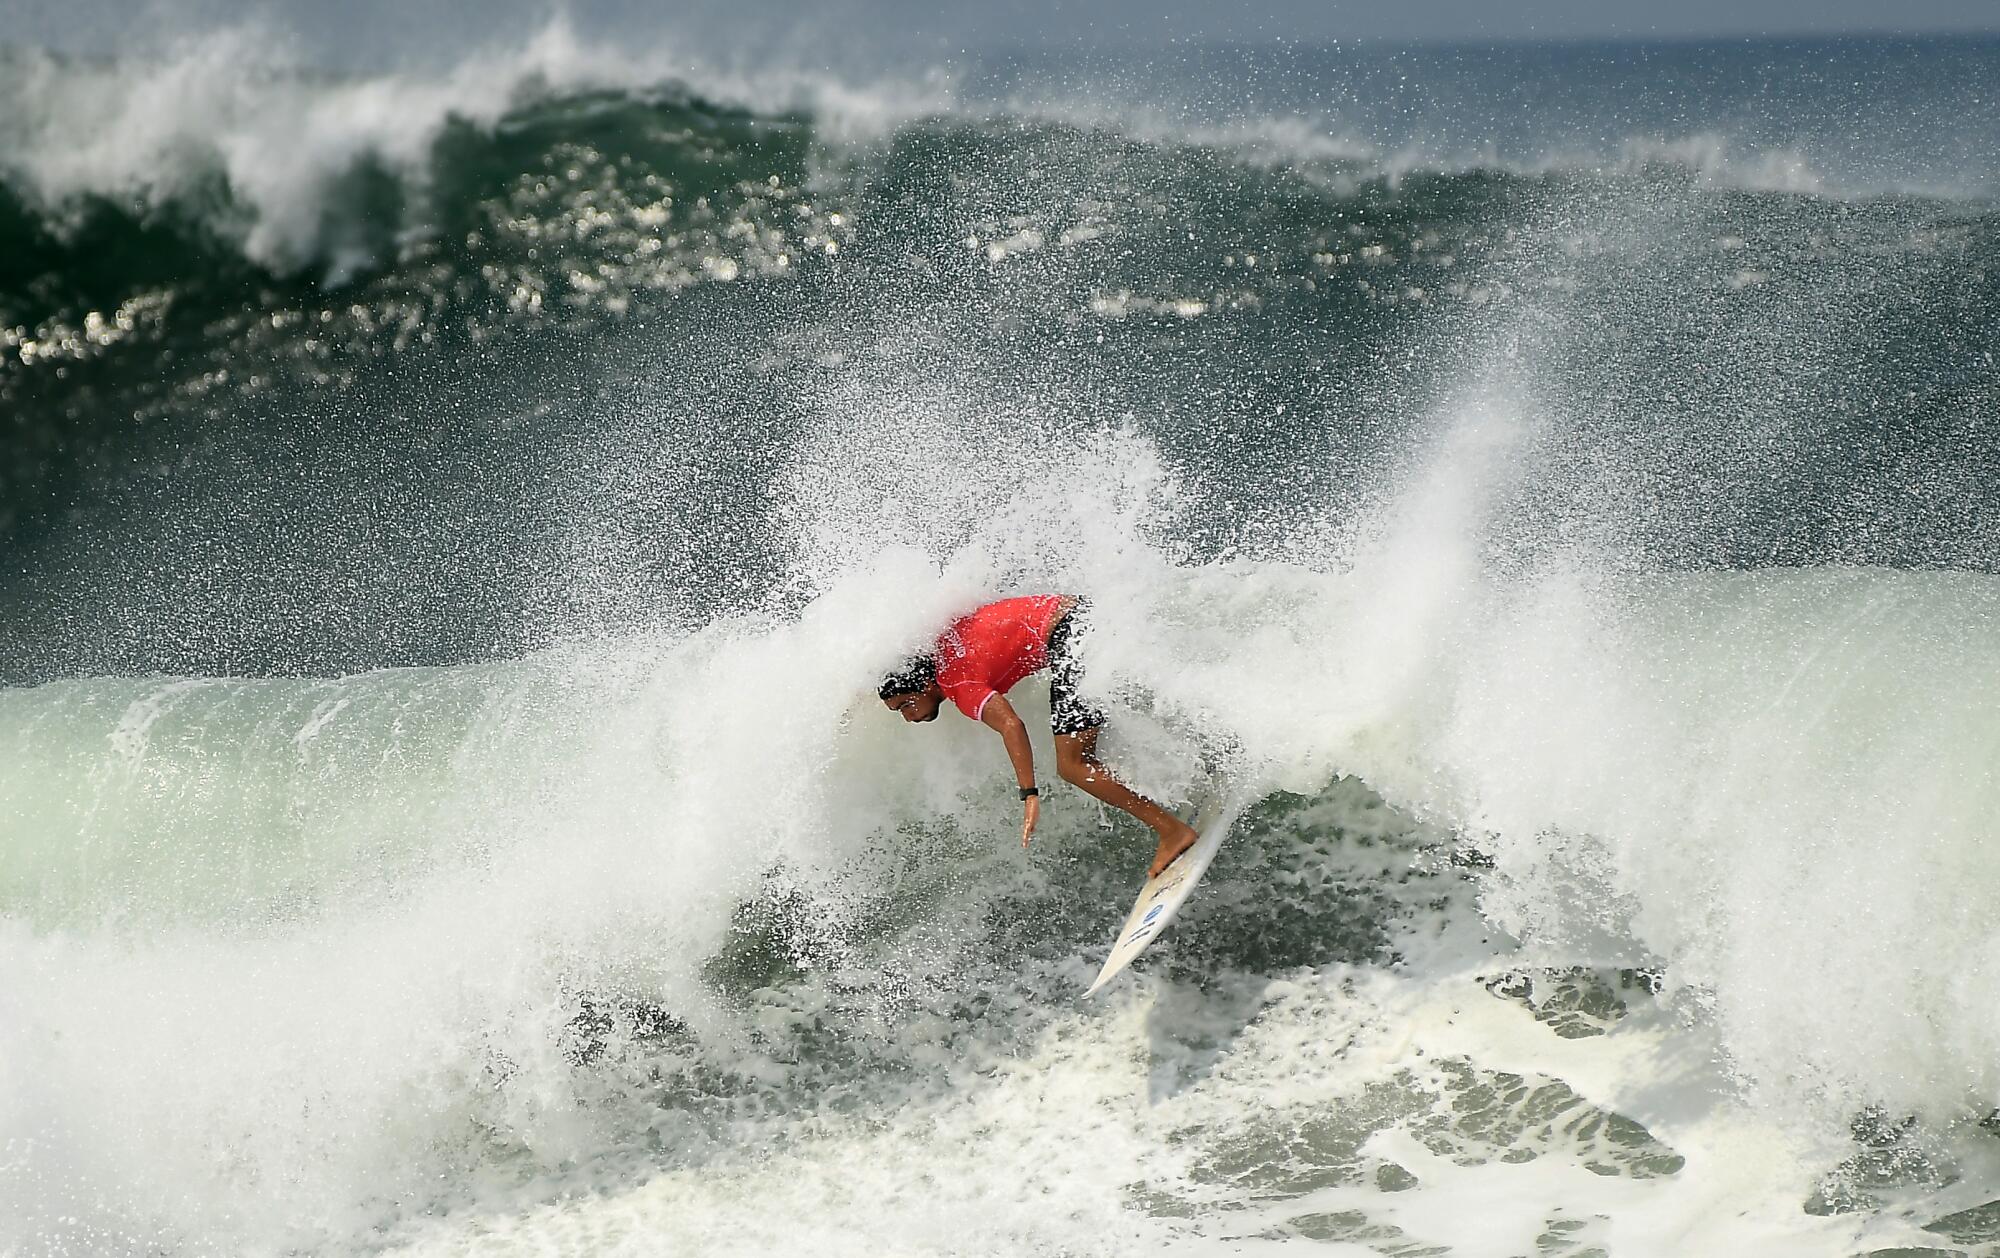 Surfer Bryan Perez rides a wave